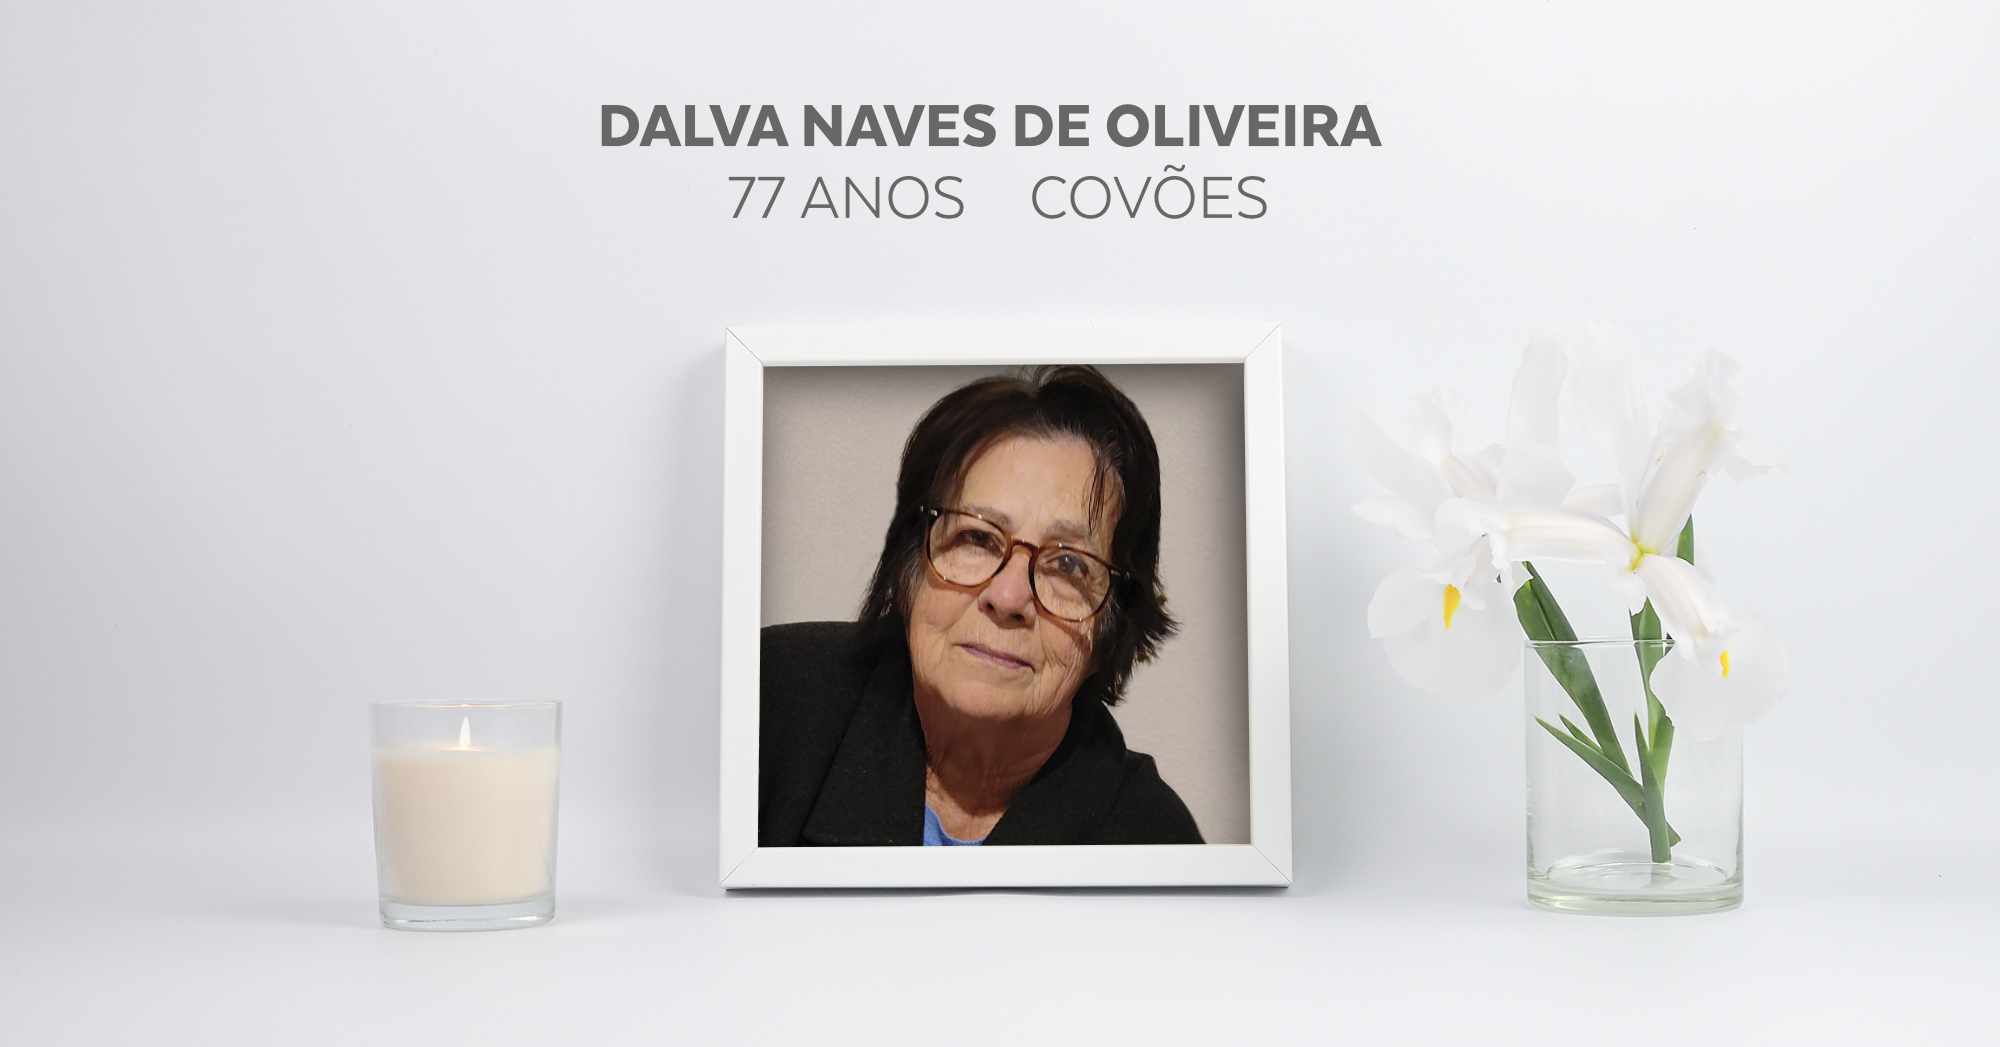 Dalva Naves de Oliveira